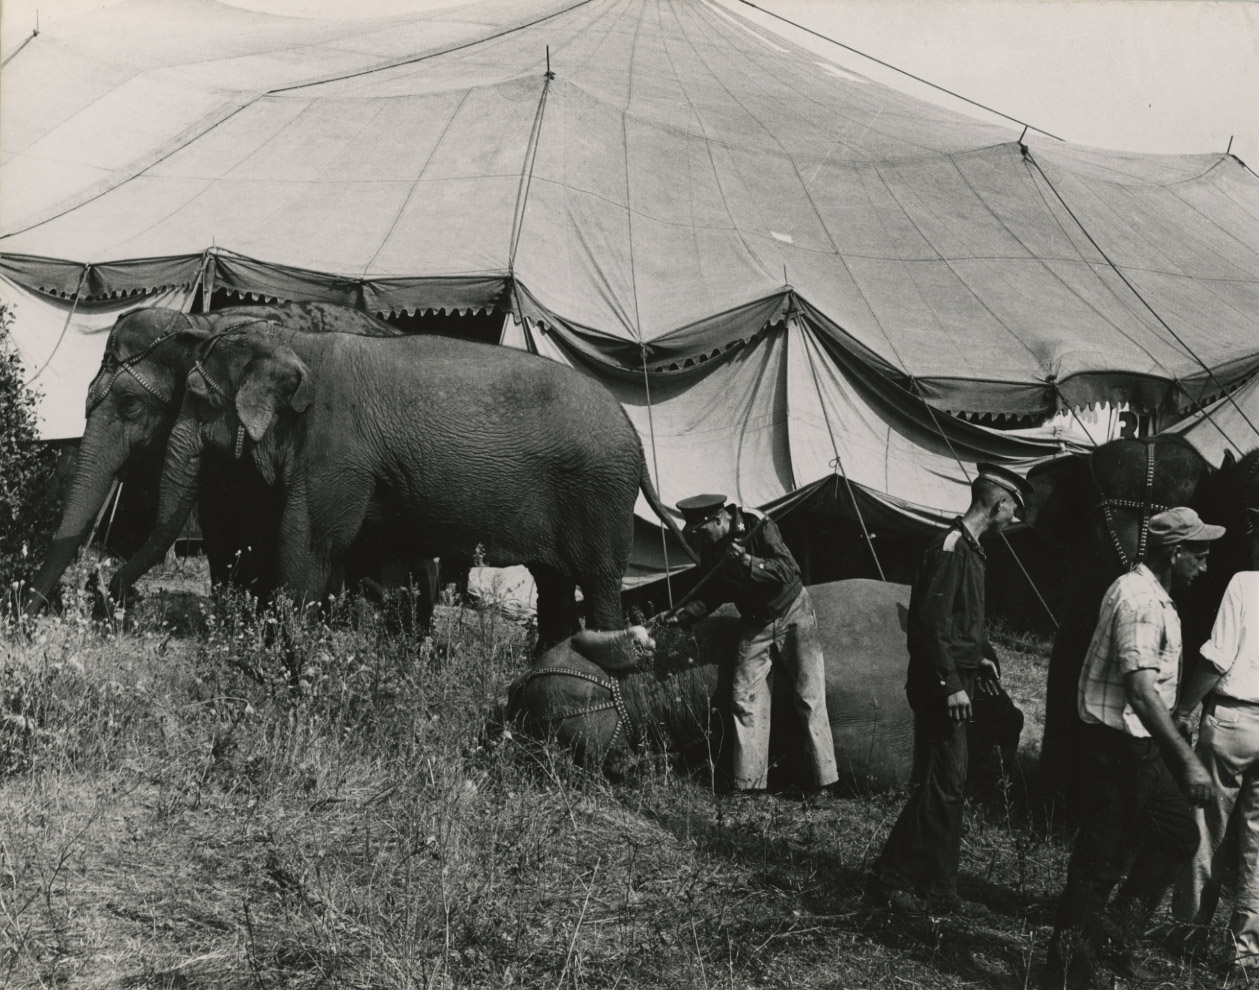 Tent and Elephants